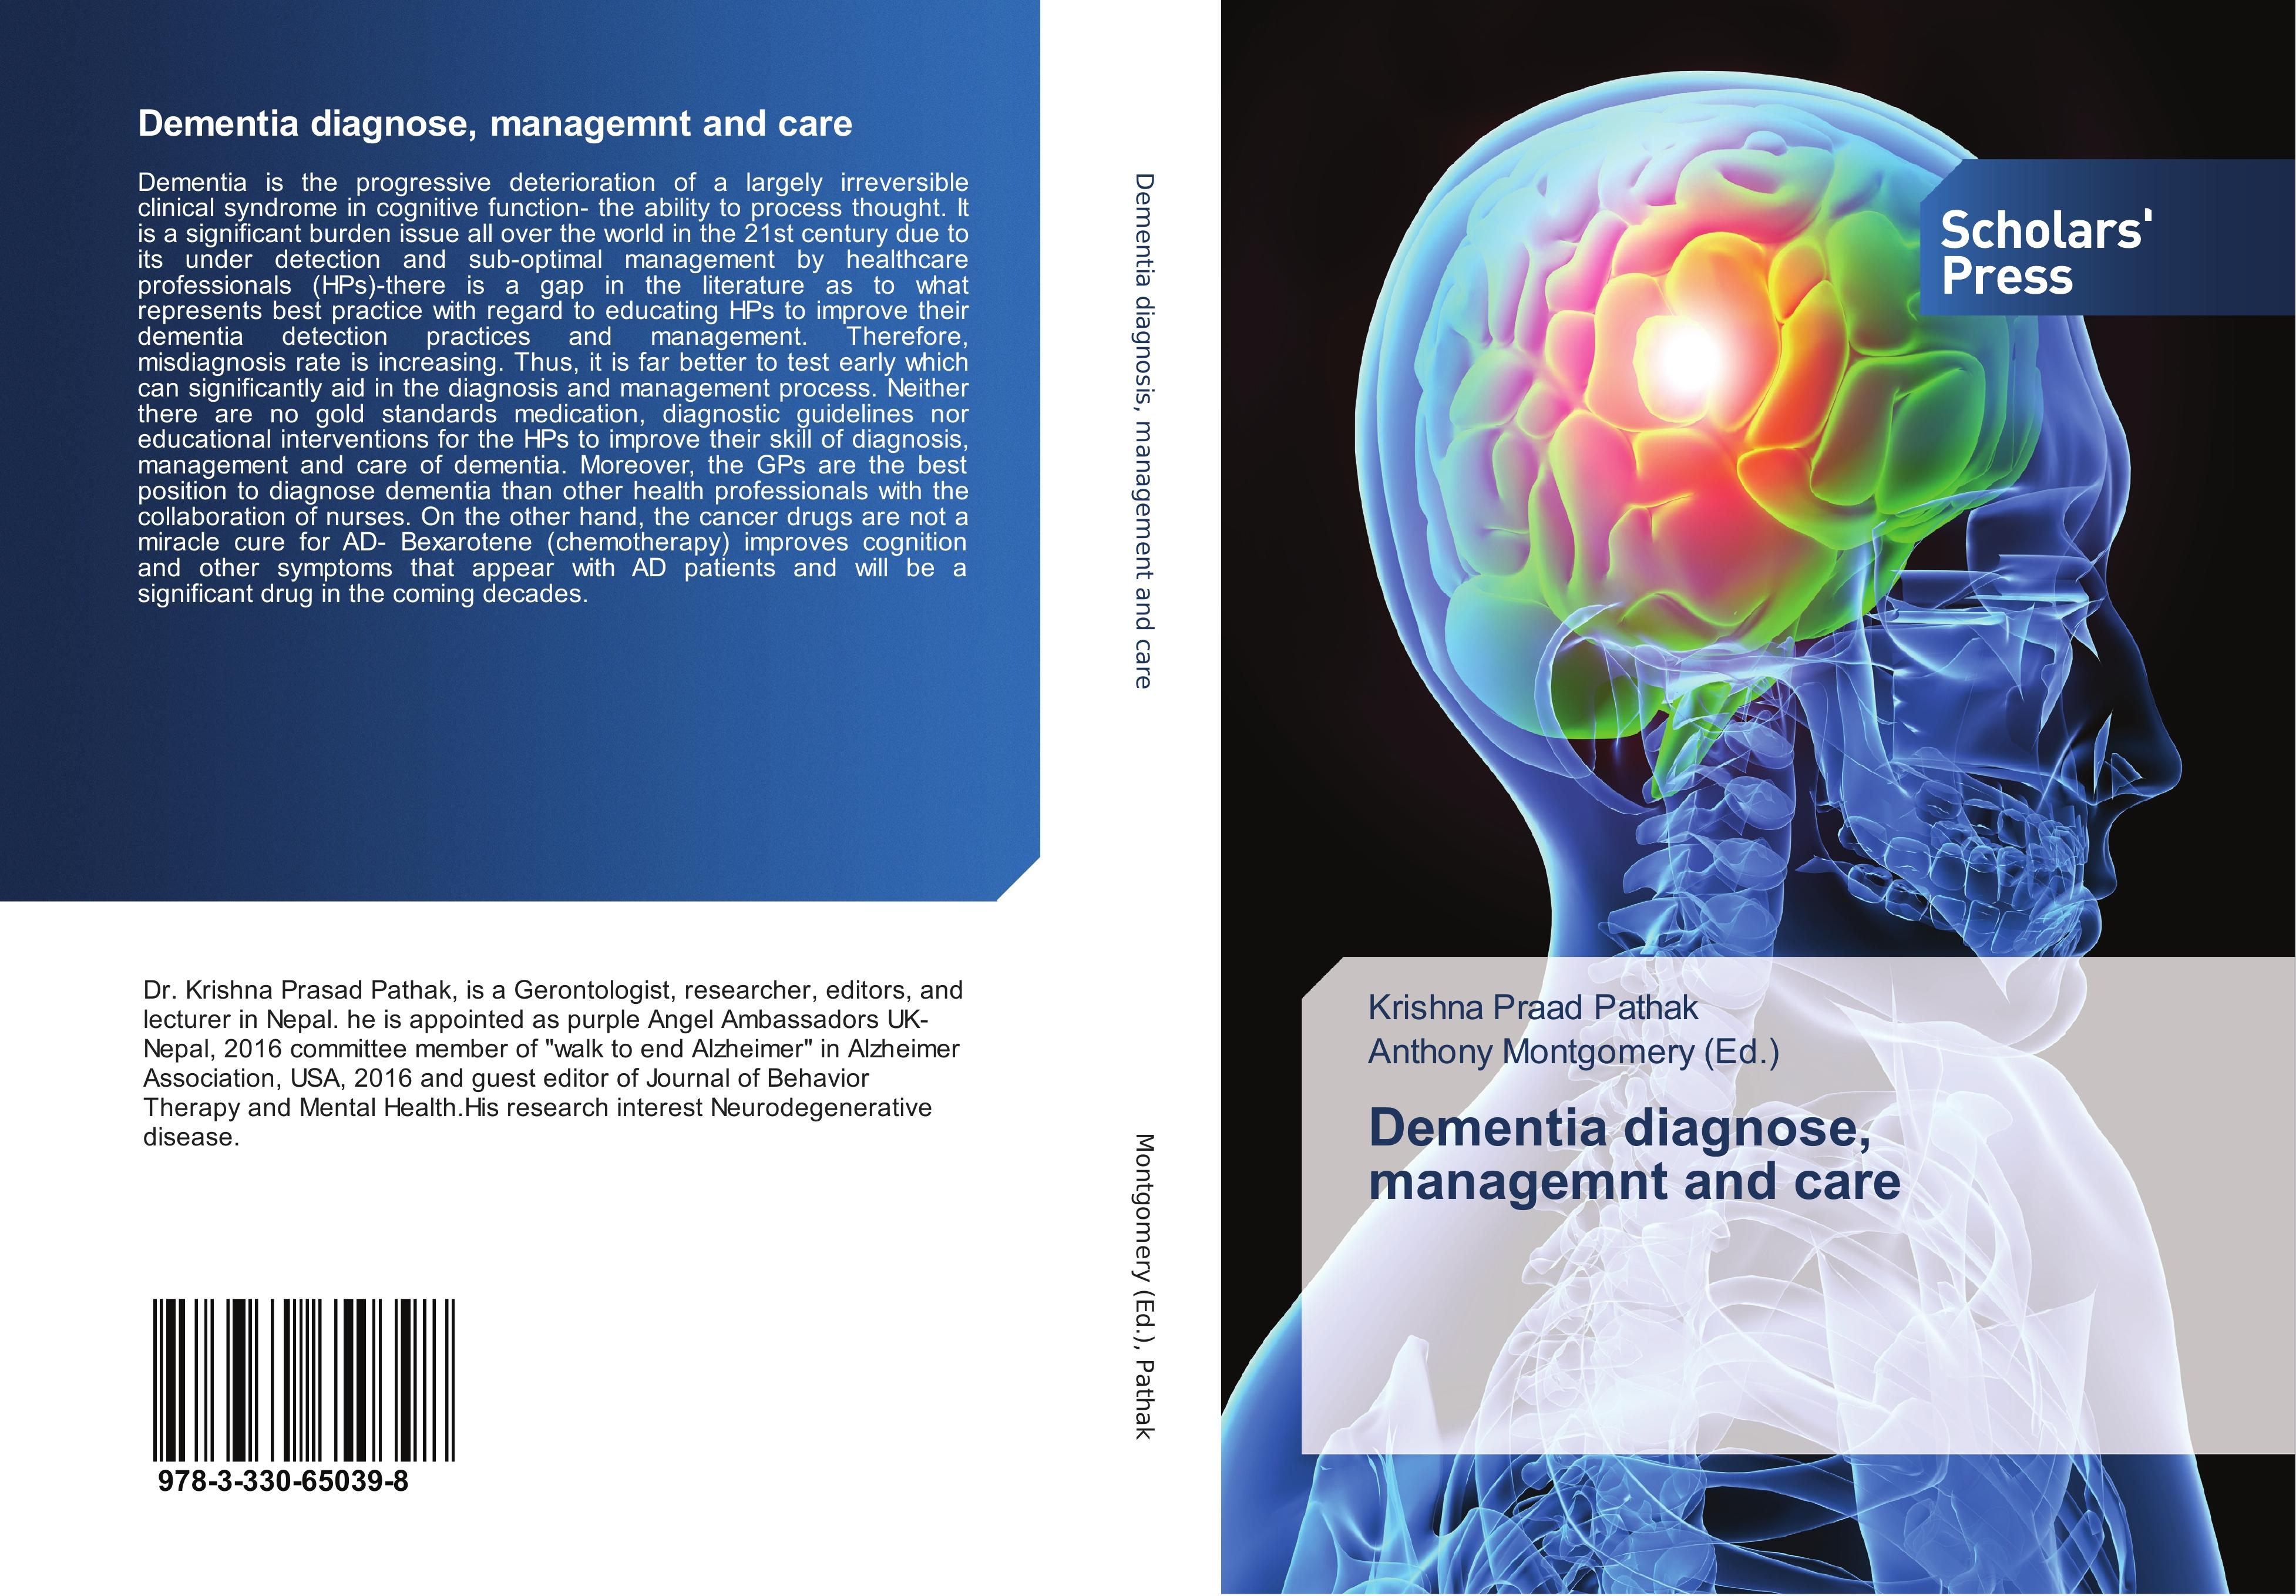 Dementia diagnose, managemnt and care - Krishna Praad Pathak|Anthony Montgomery